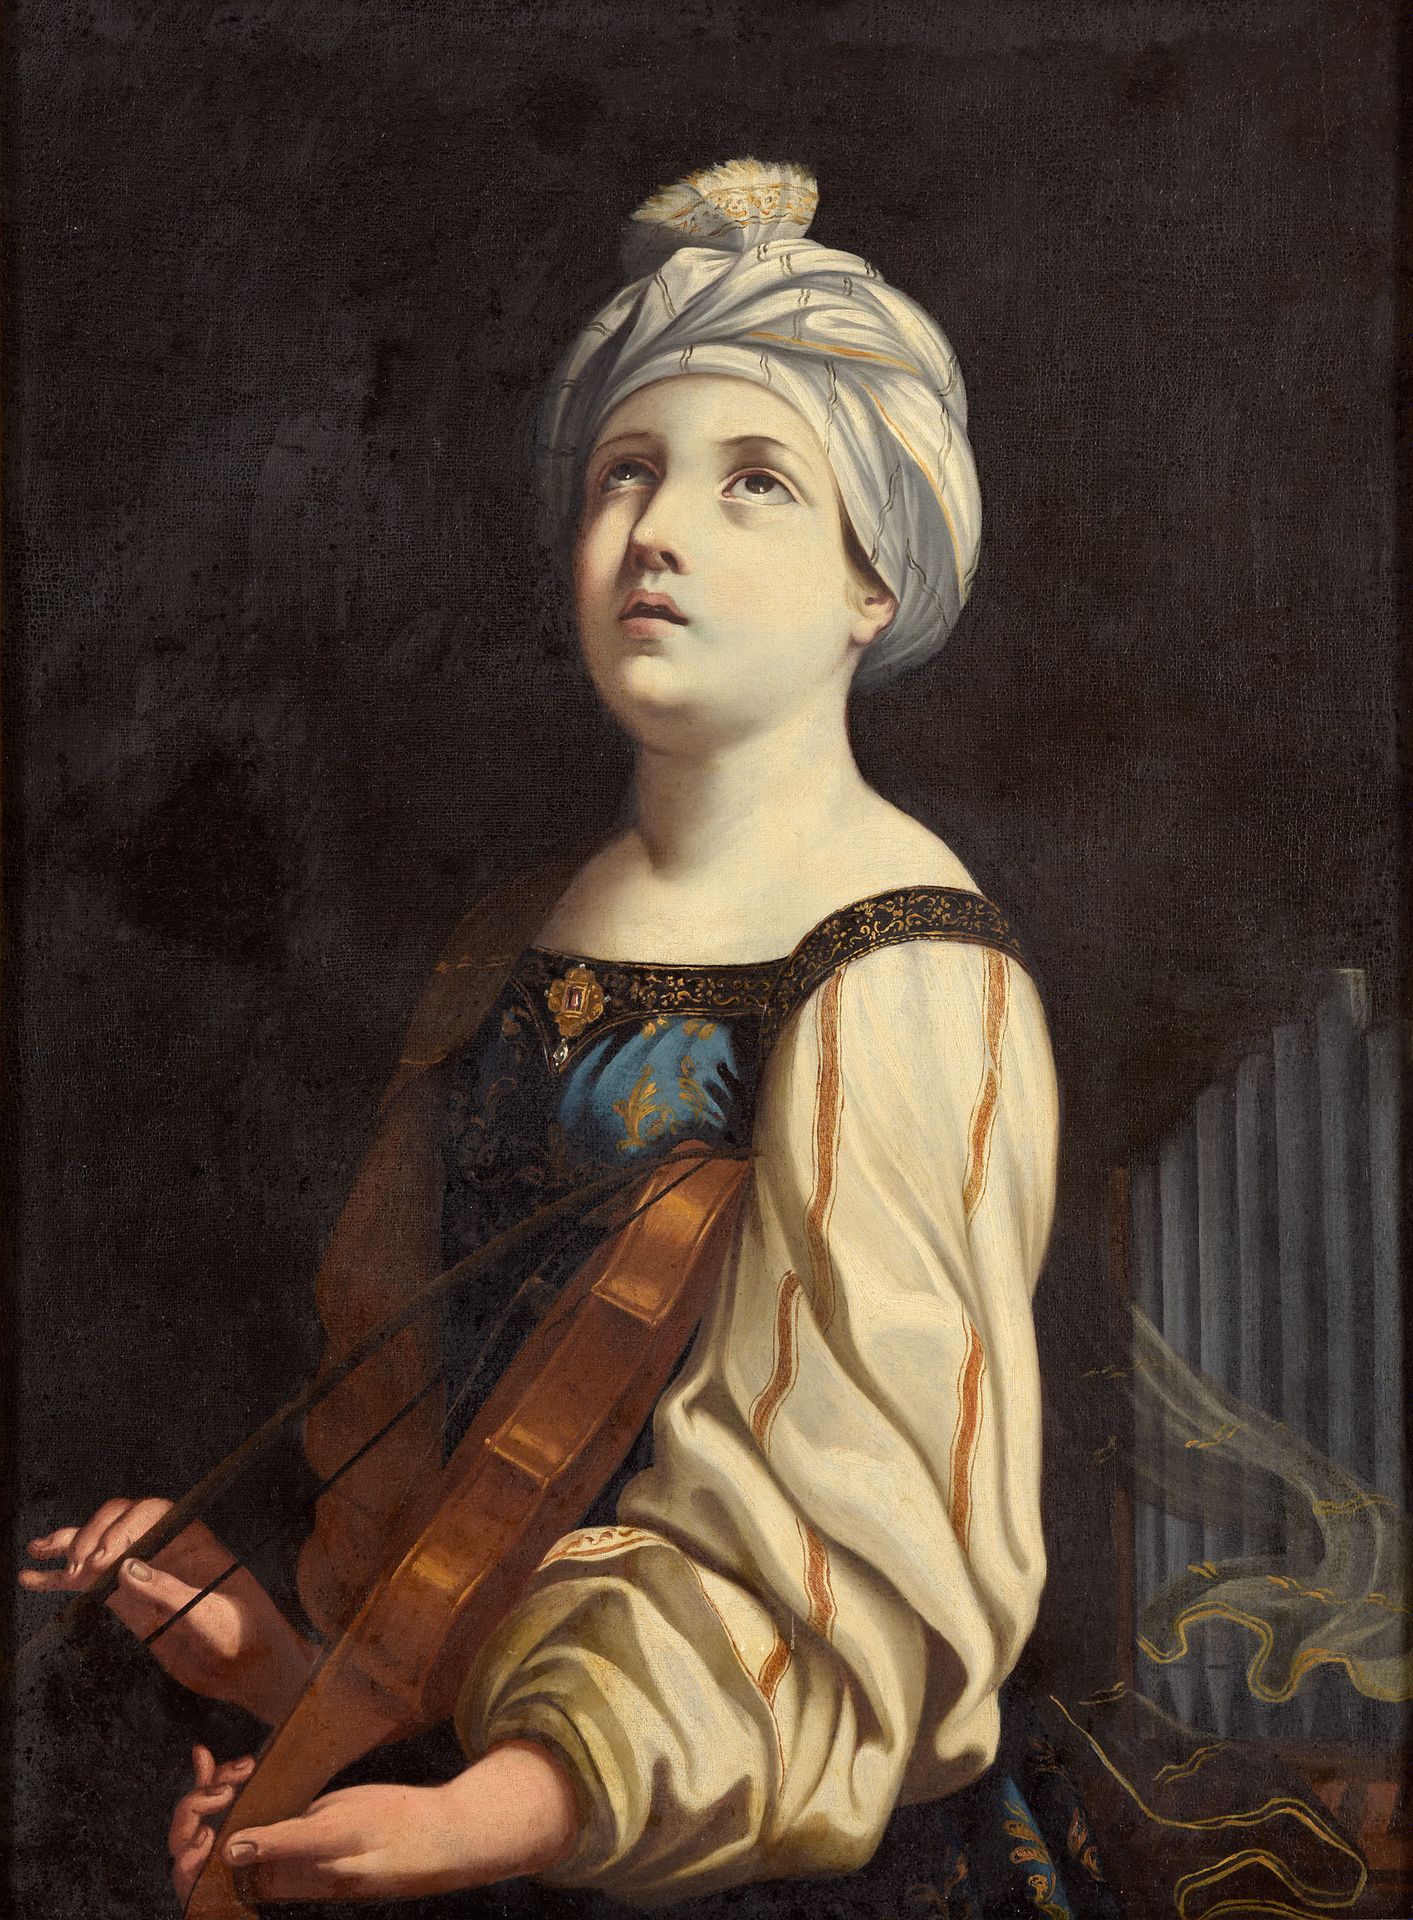 Reni, Guido Reni, Guido1575 Calvenzano - 1642 Bologna (after), 18世纪。
圣塞西莉亚。
油彩/白&hellip;